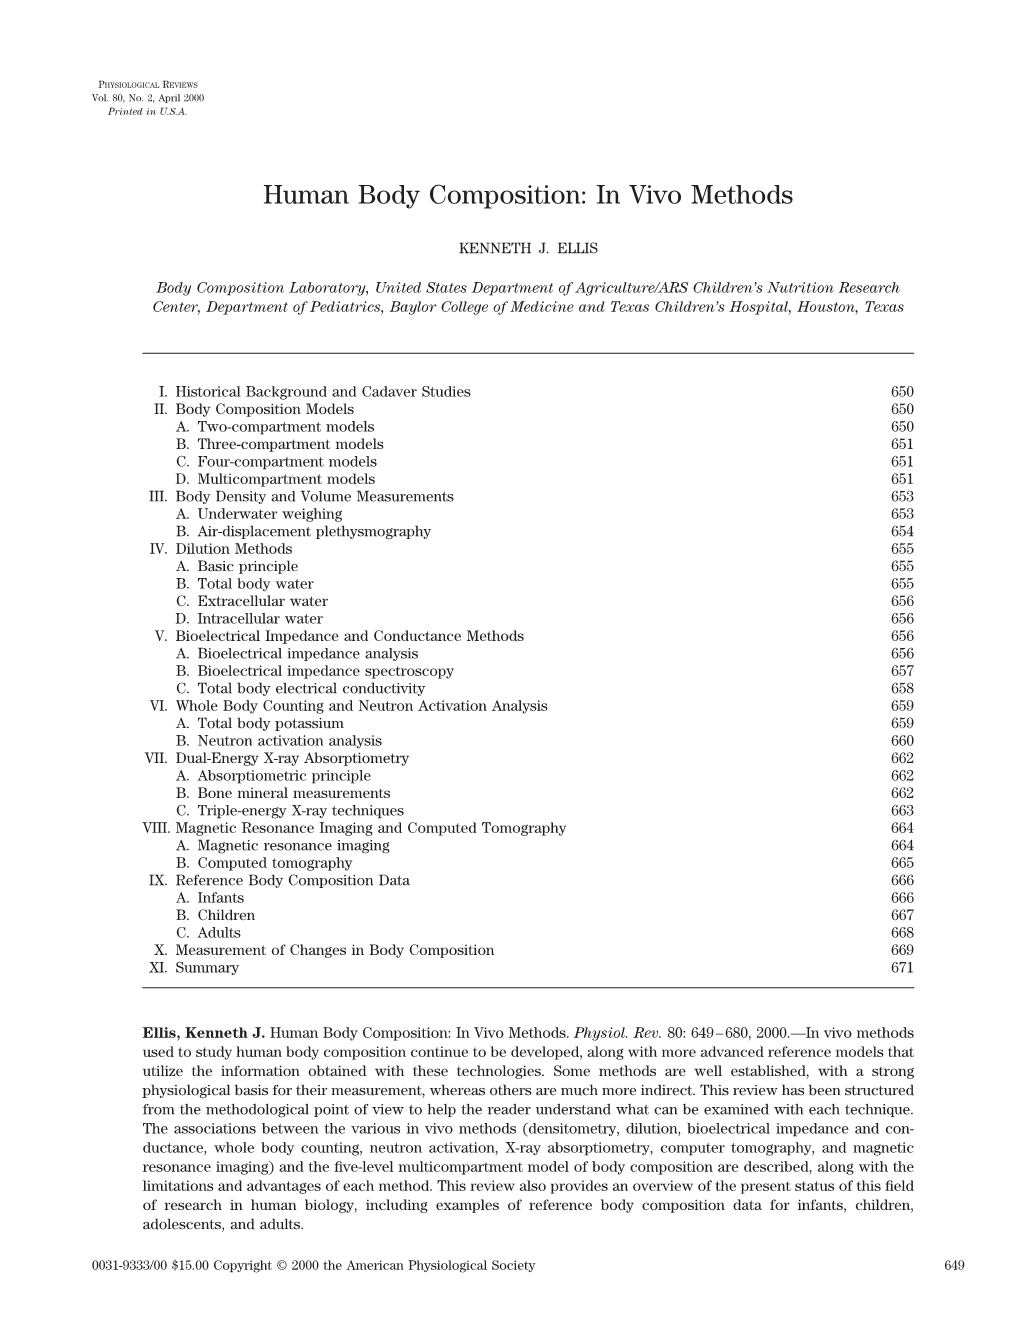 Human Body Composition: in Vivo Methods